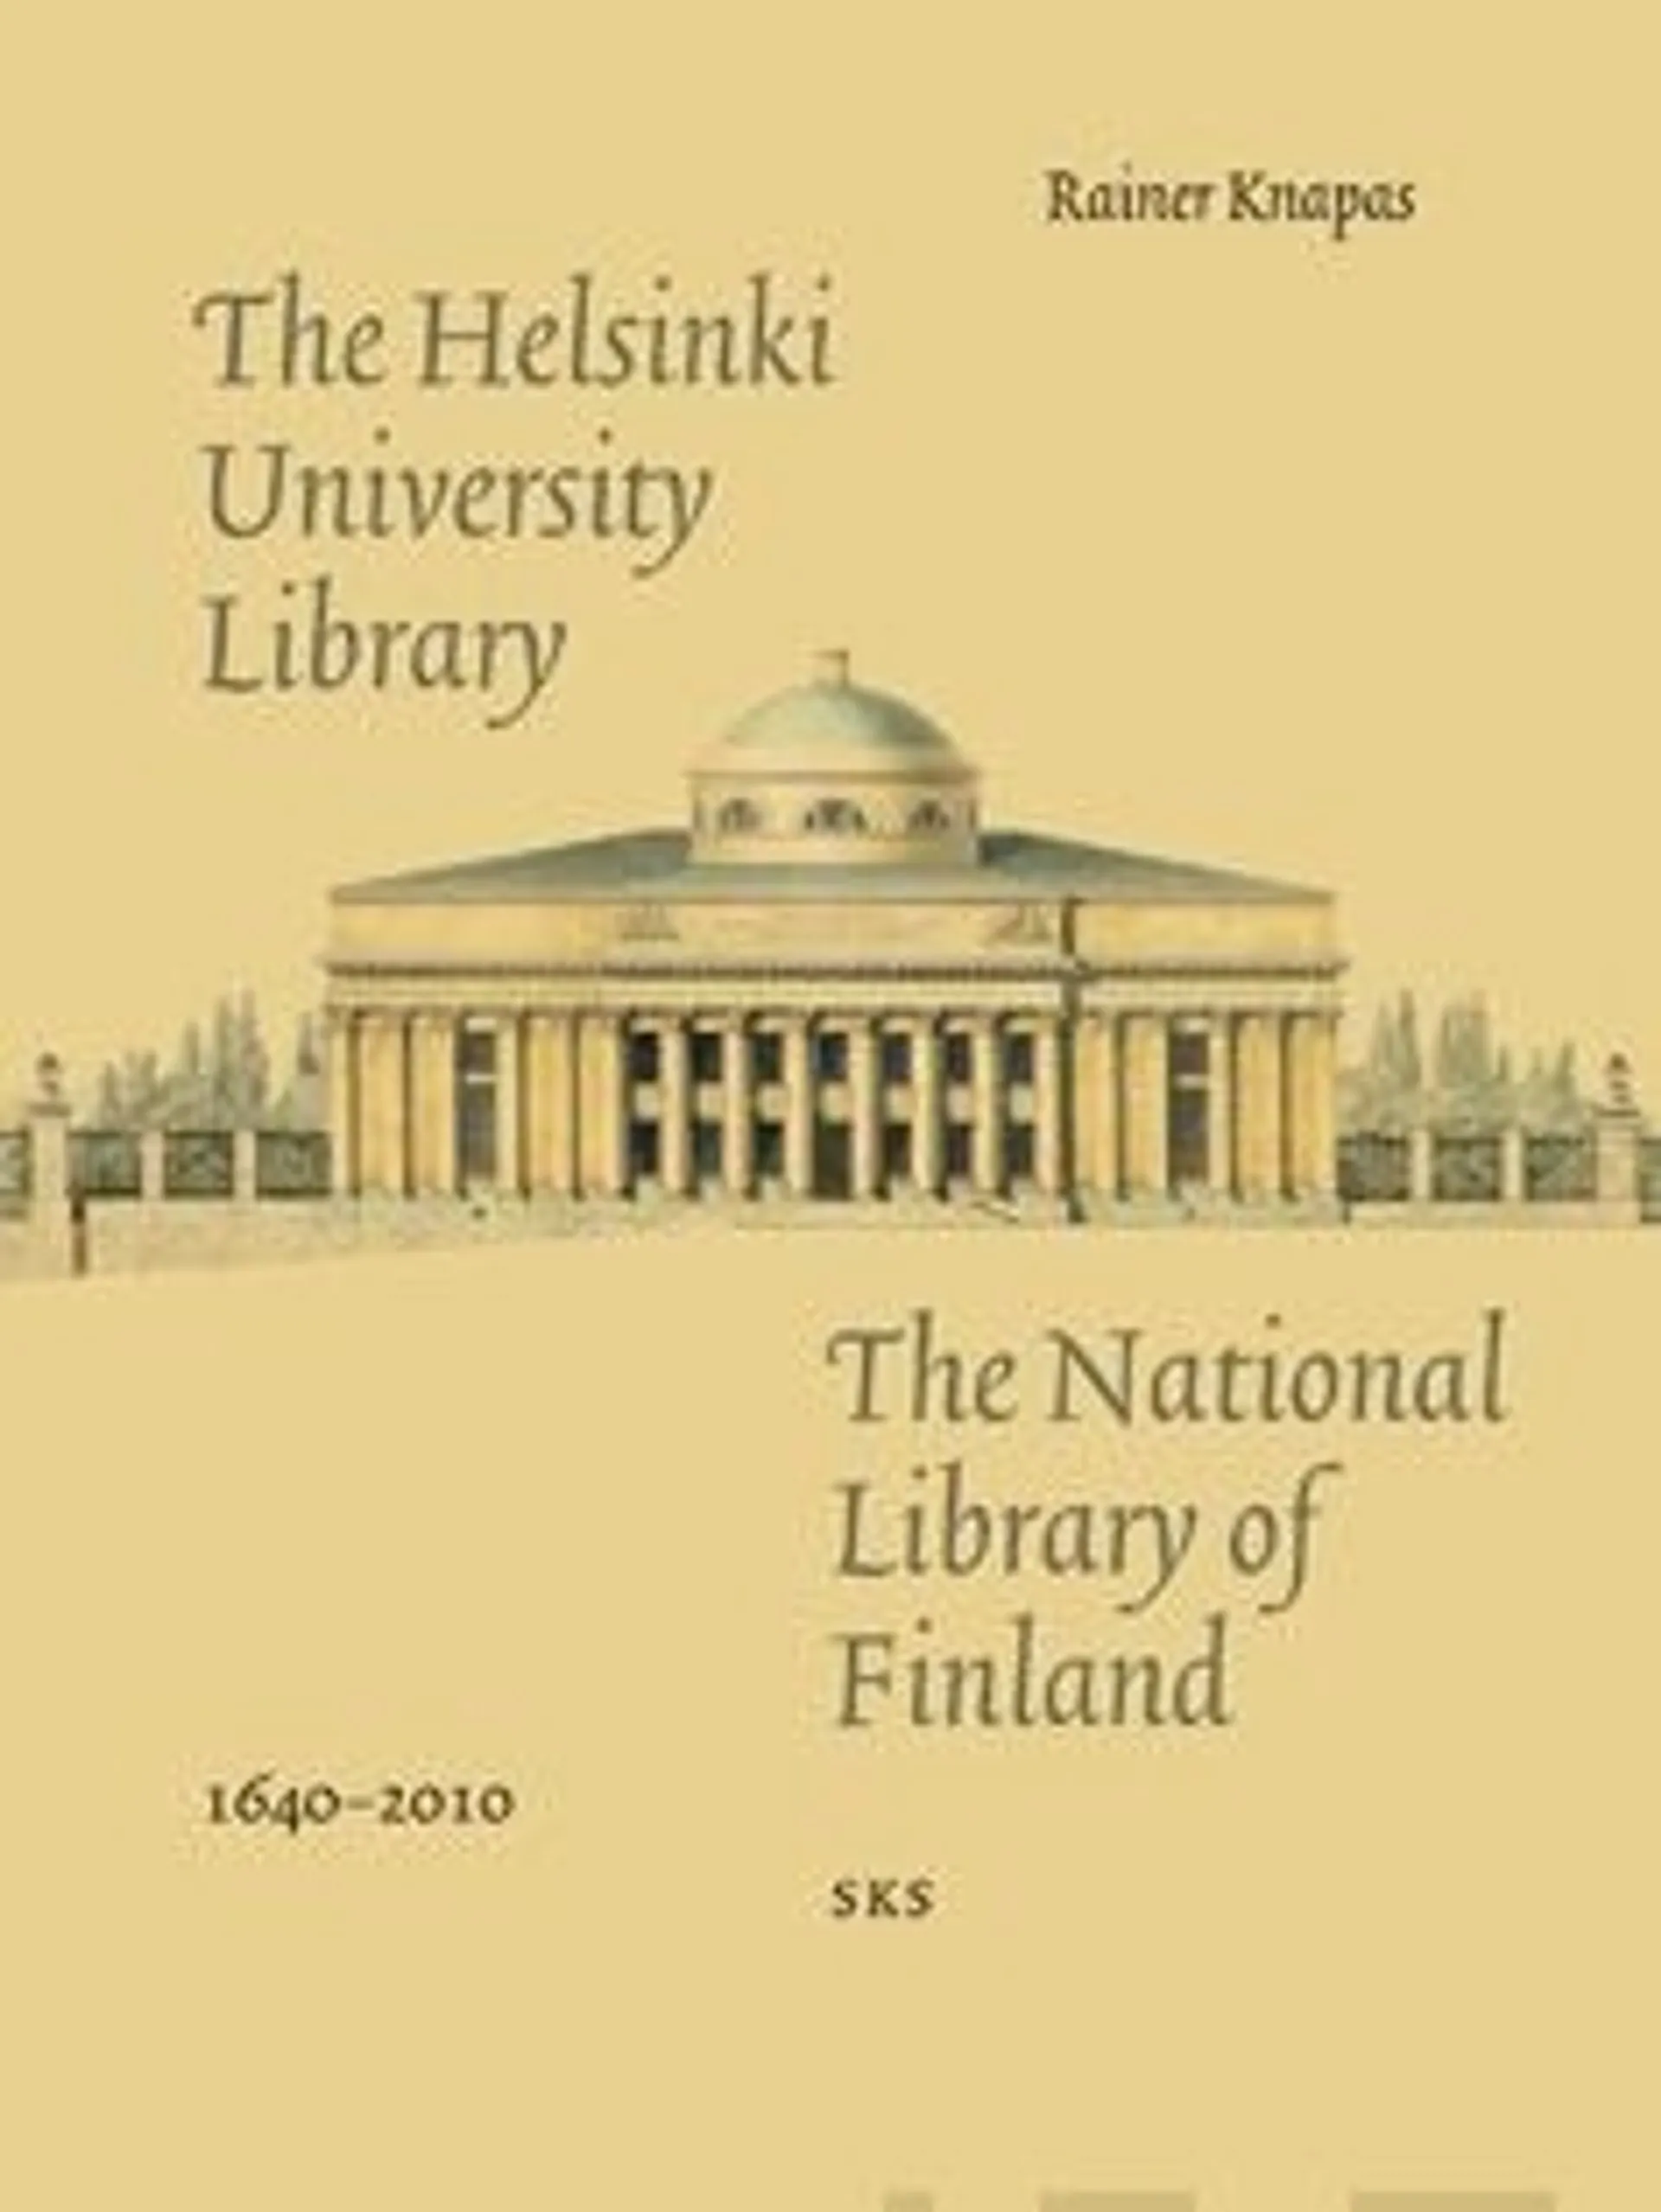 Knapas, The Helsinki University Library